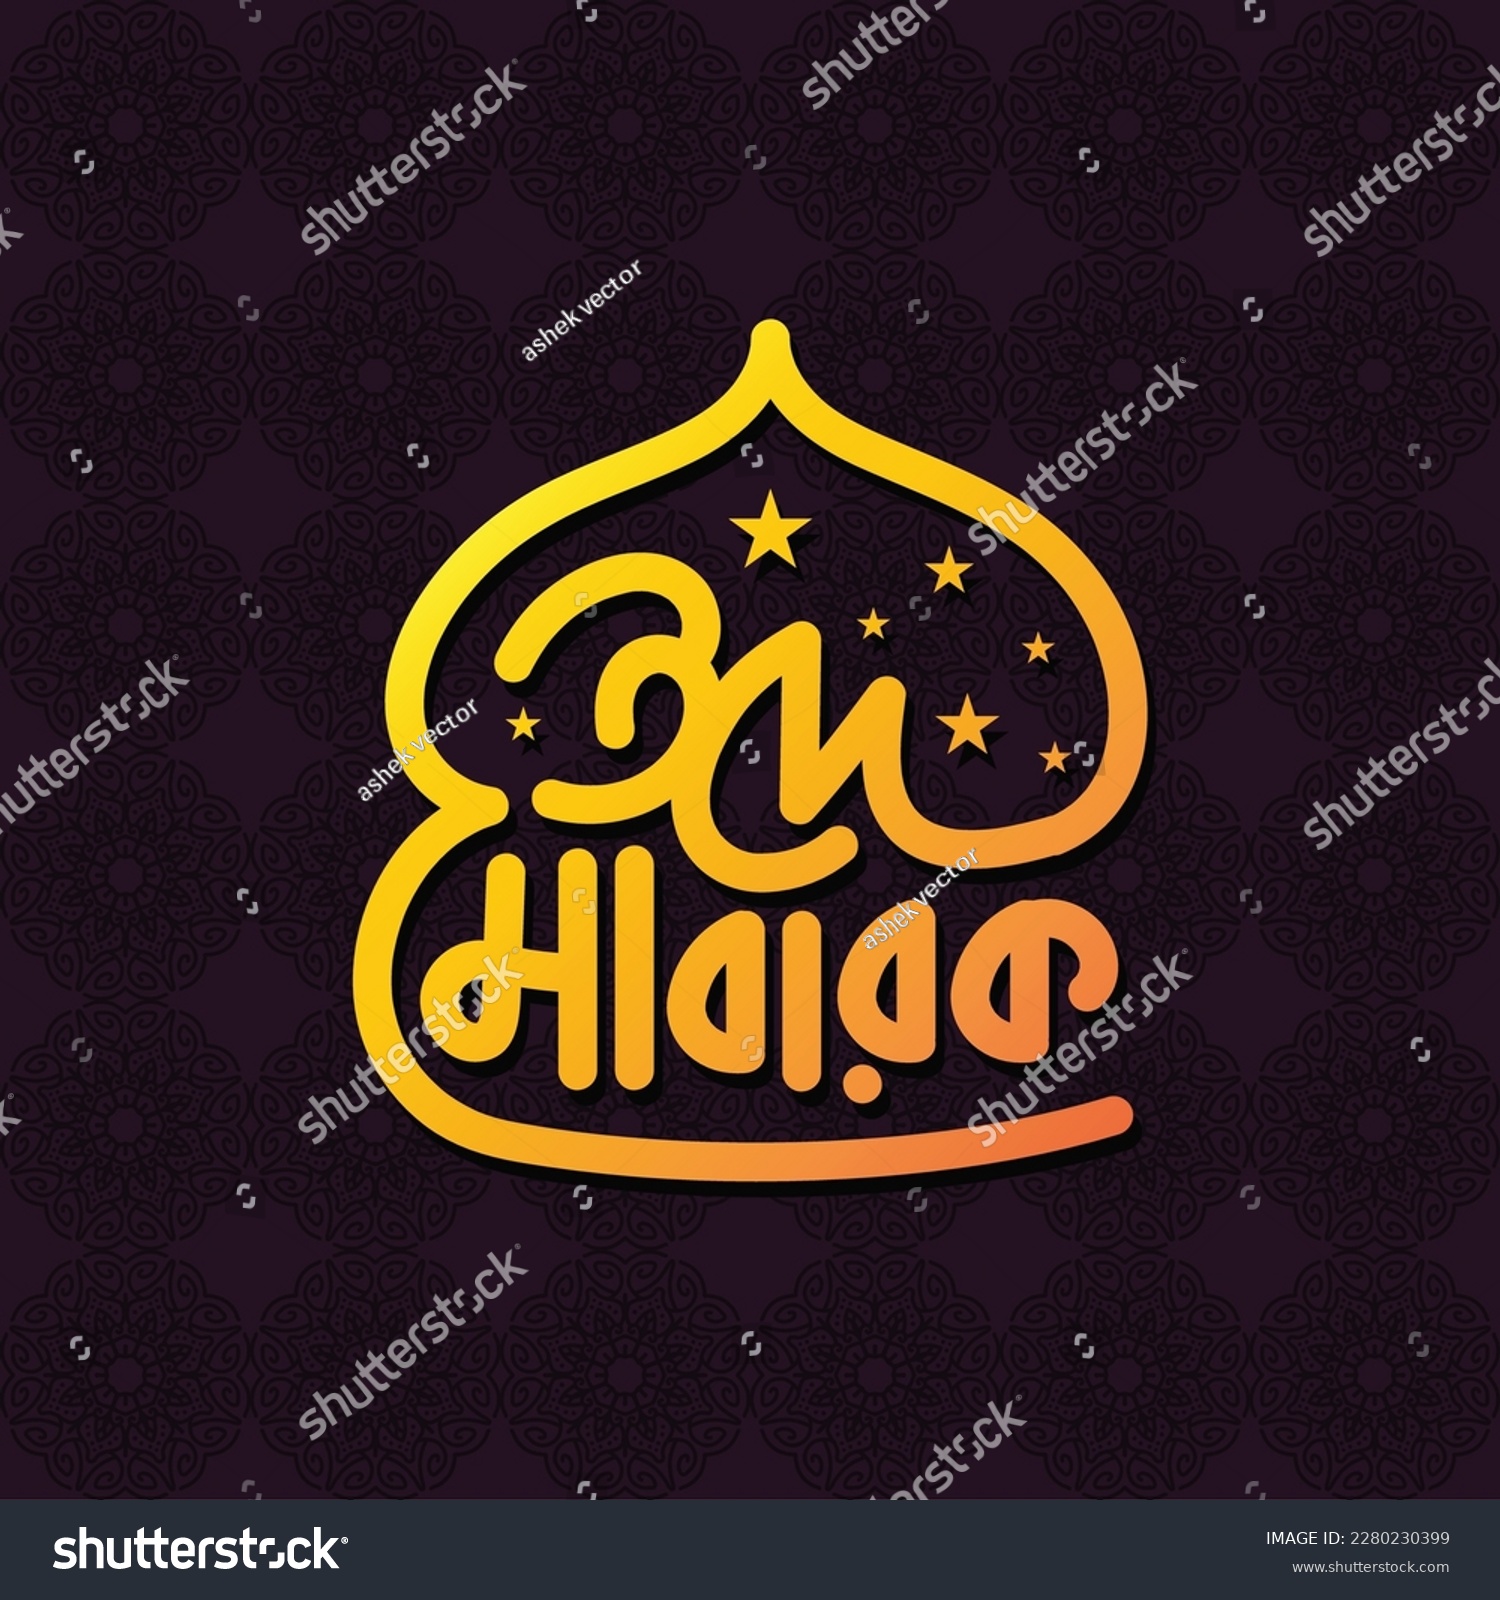 SVG of Eid Mubarak Bangla typography. Eid ul Adha vector illustration. Religious holidays celebrated by Muslims worldwide. 
Eid Mubarak greeting card template design. Arabic style Bengali typography.  svg